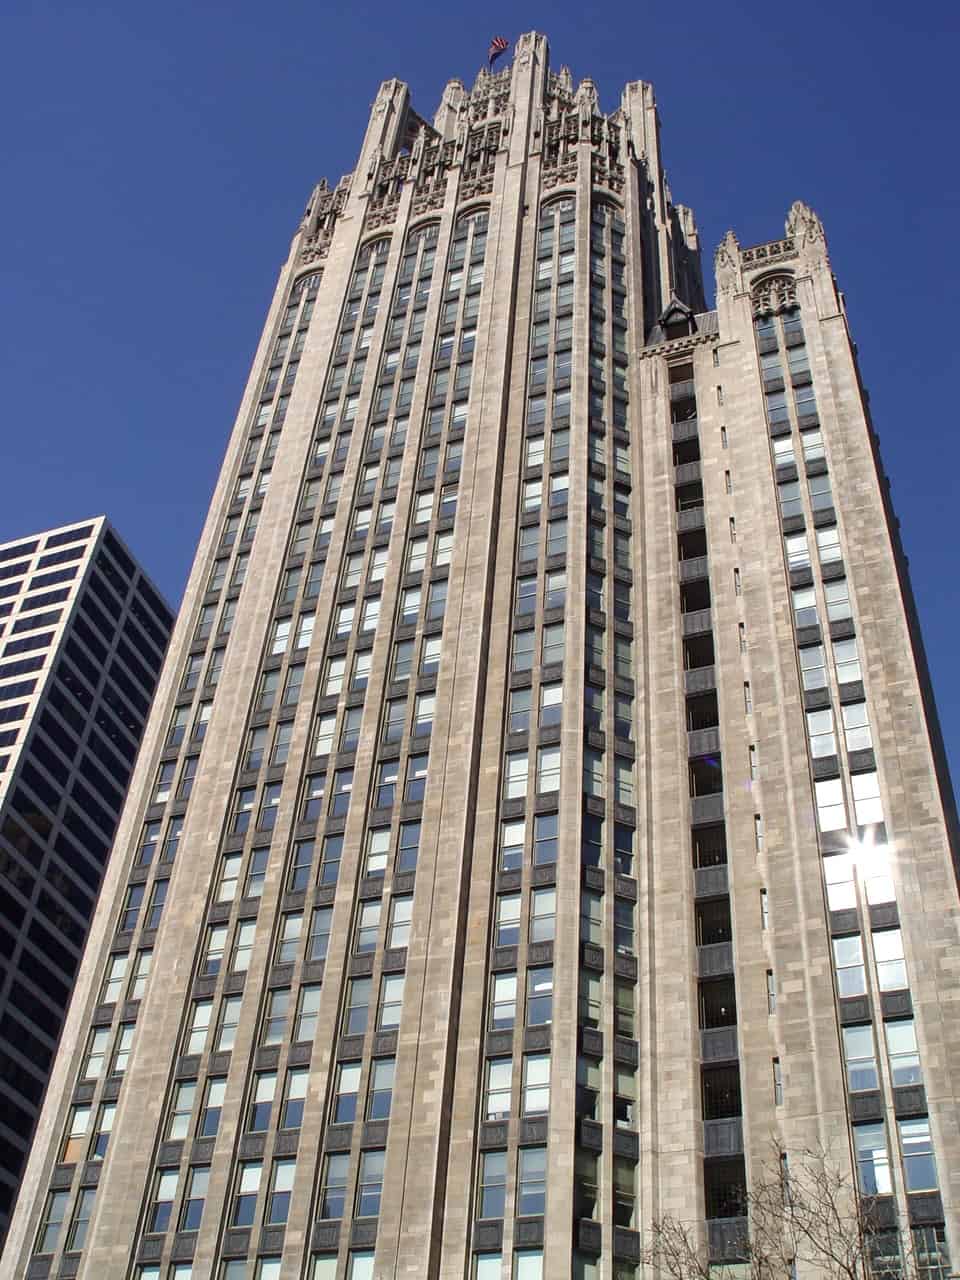 Tribune Tower in Chicago, Illinois